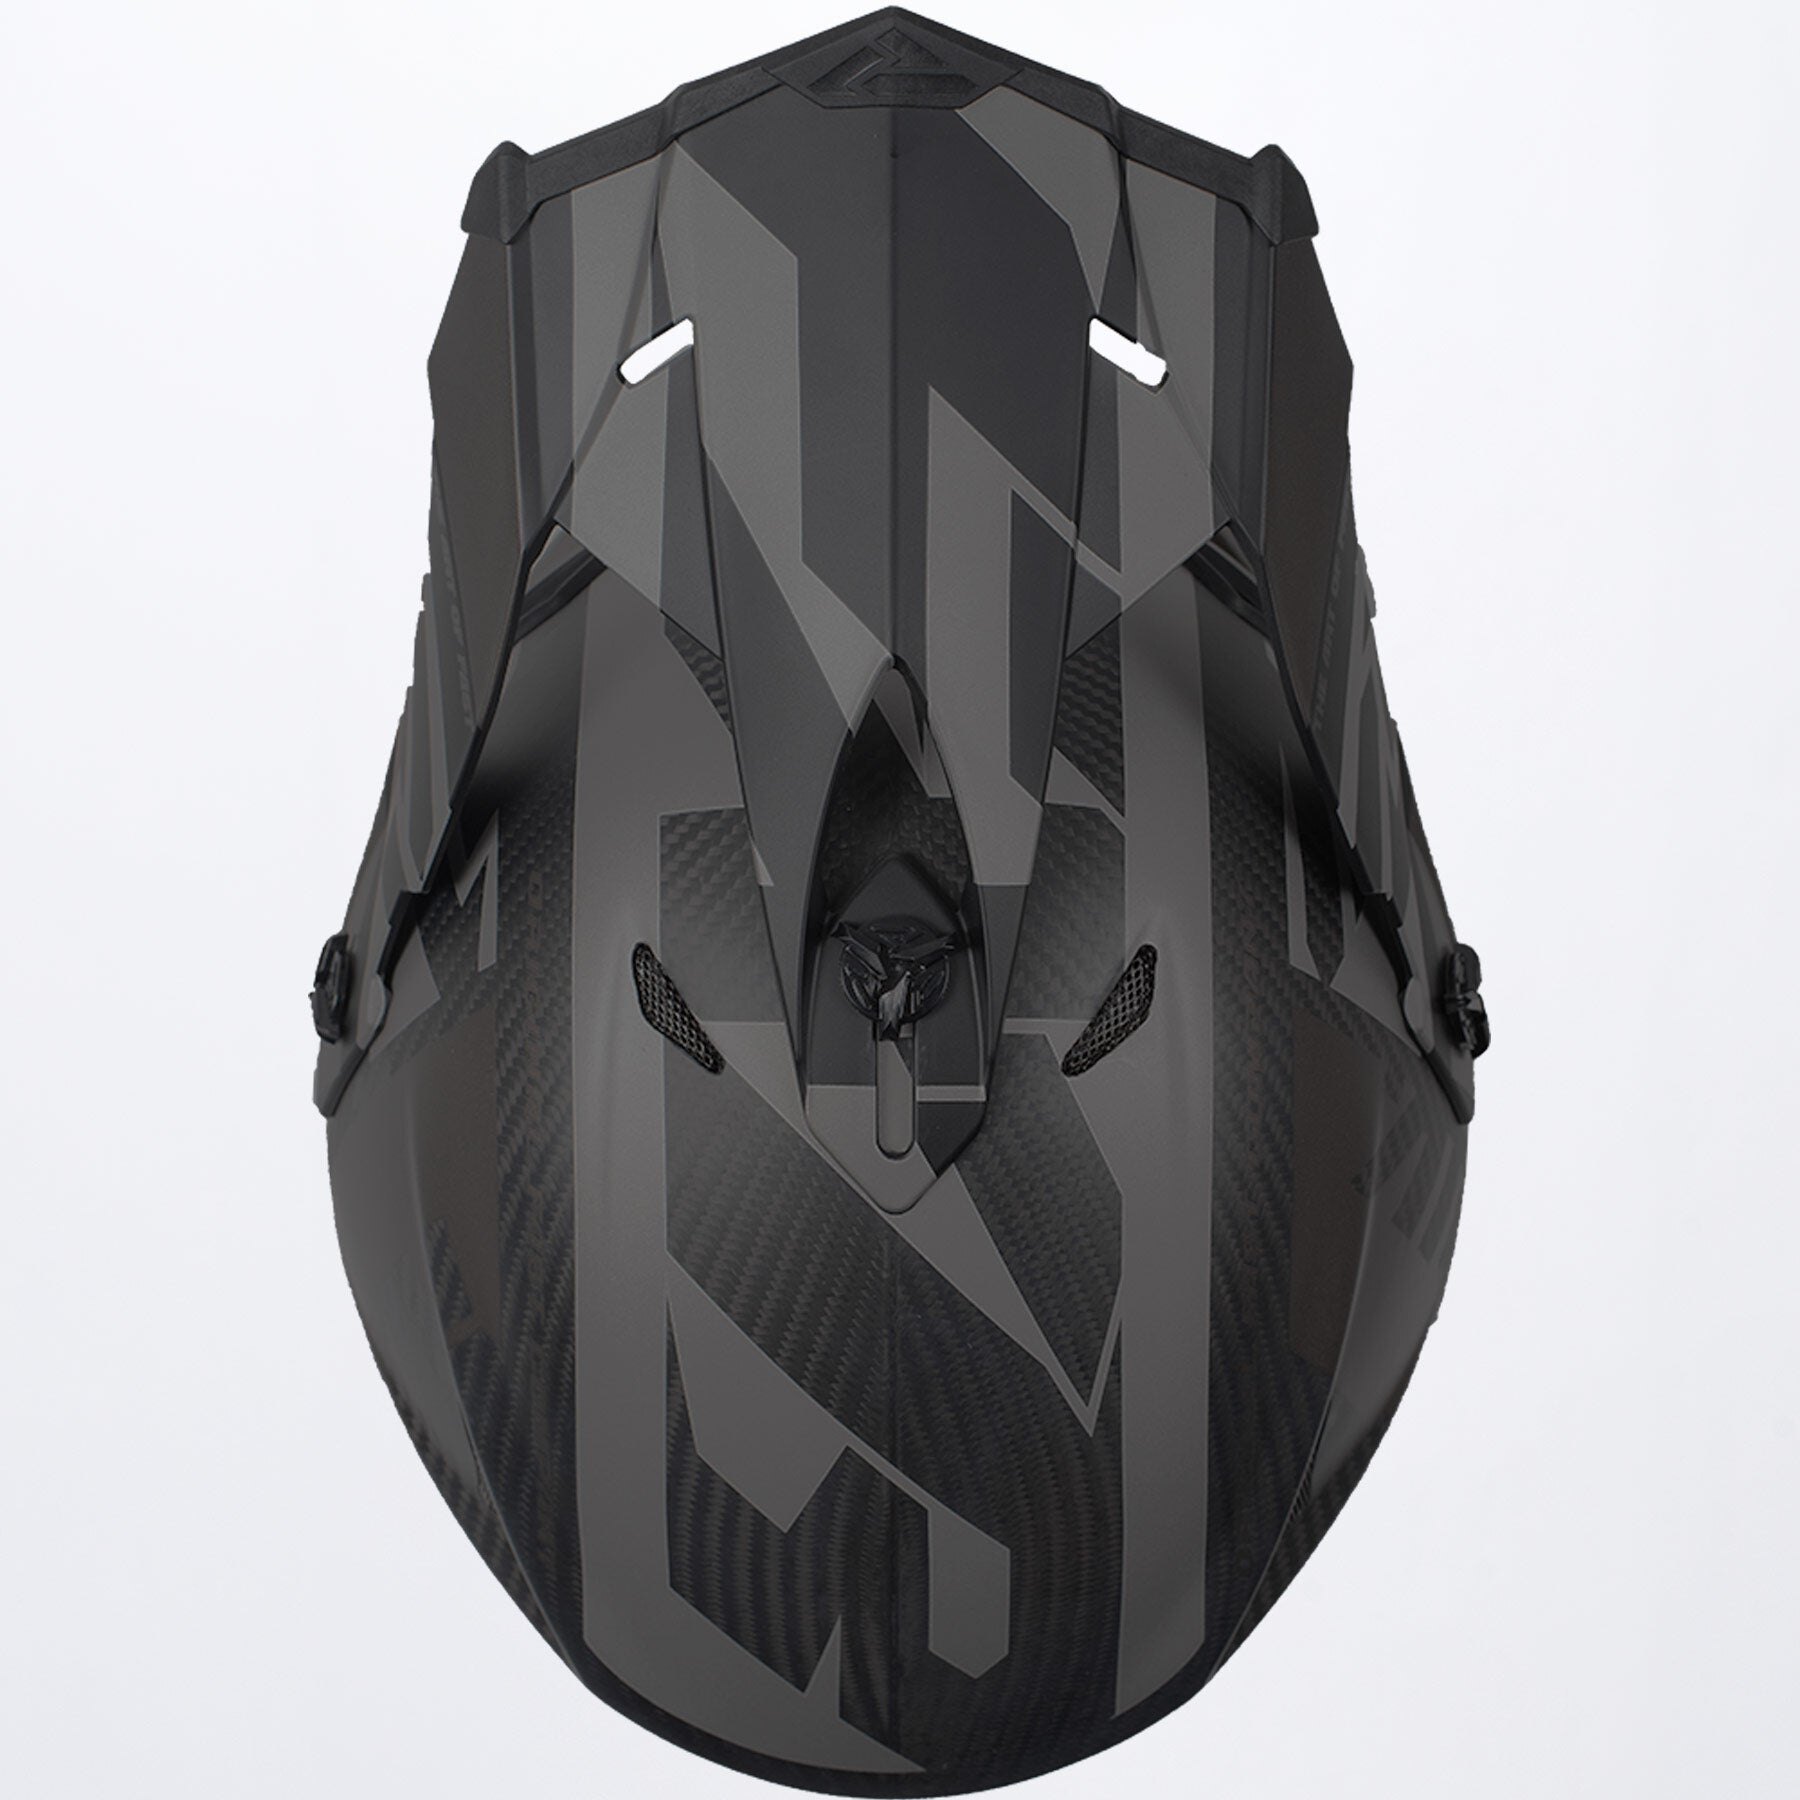 Blade 2.0 Carbon Race Div Helmet